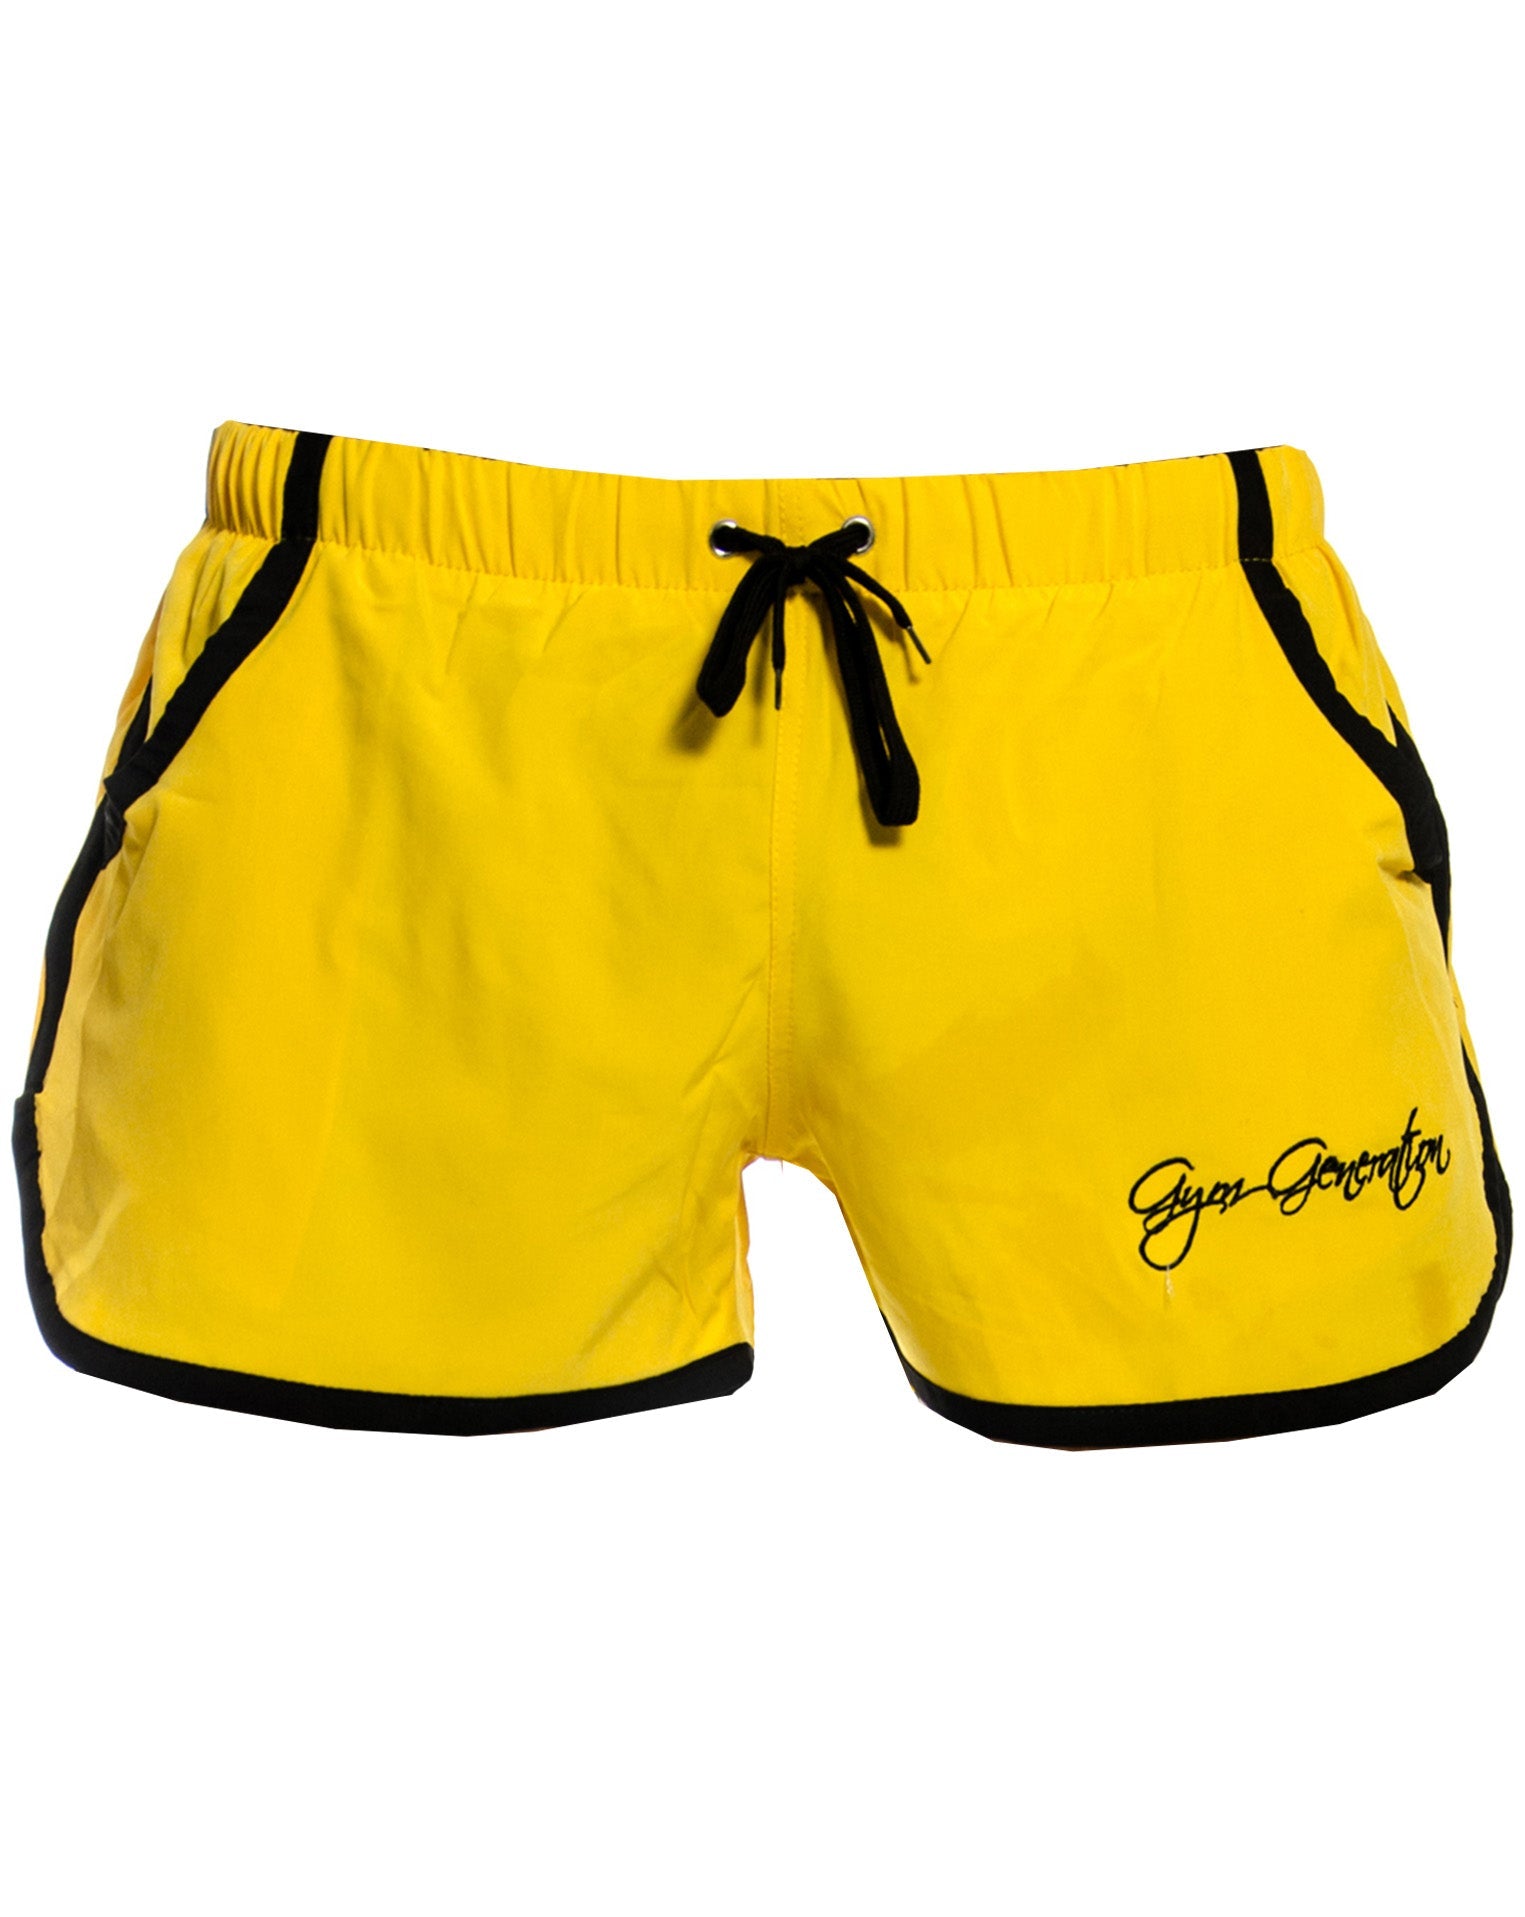 Men's Gym Zyzz Shorts in Yellow – Gym Generation®